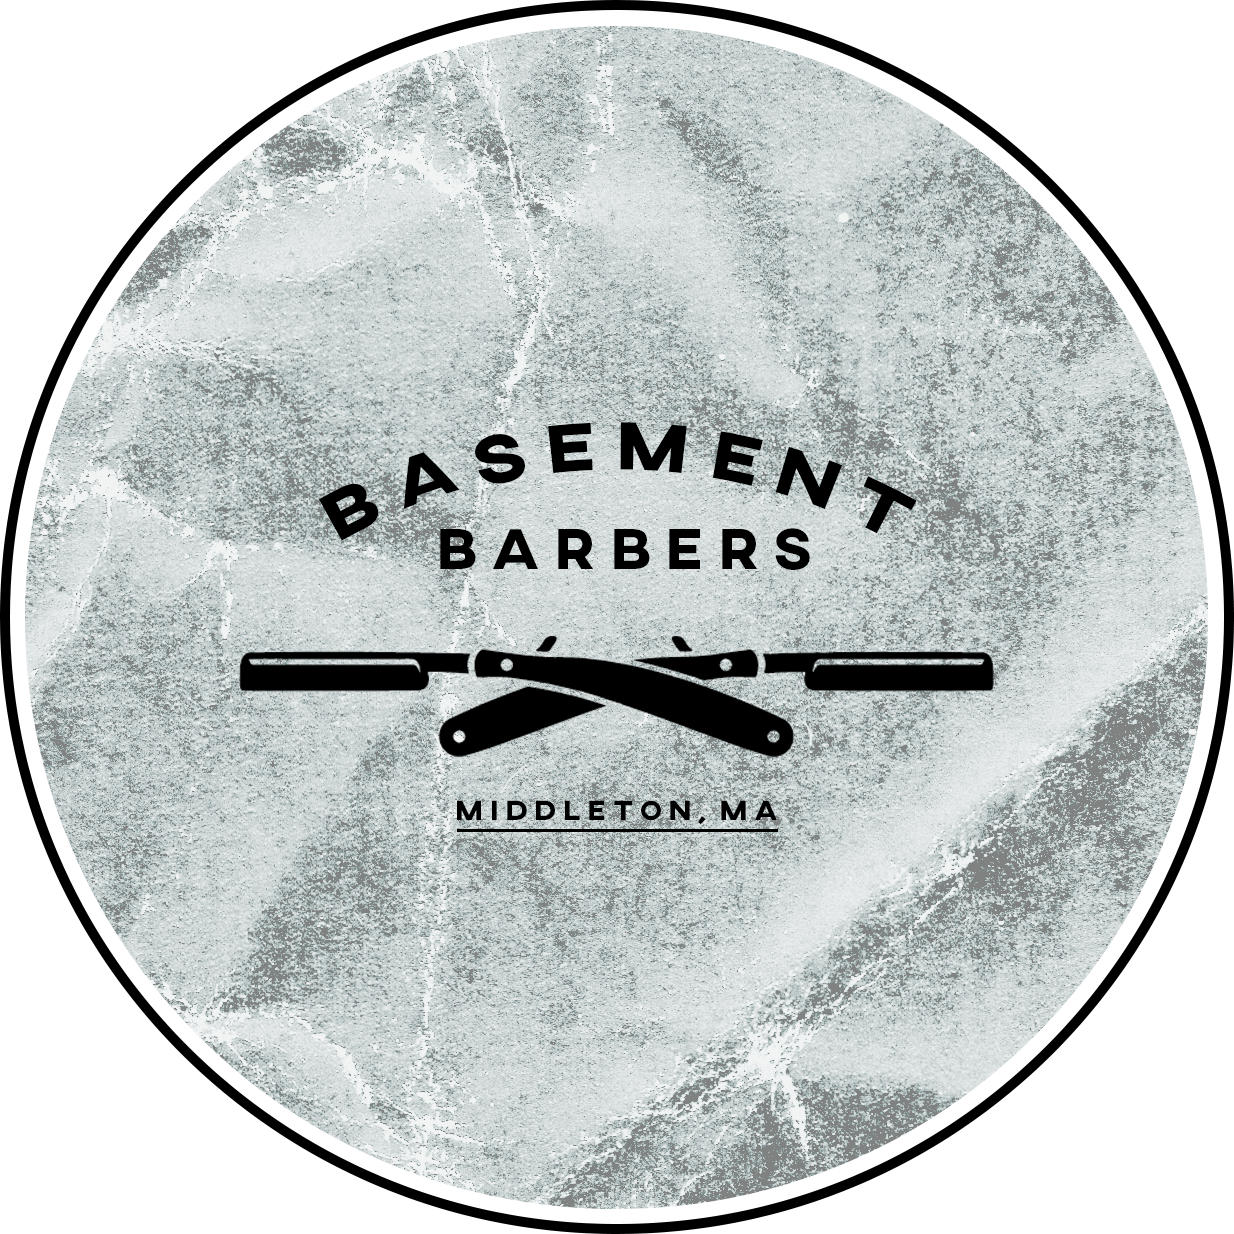 Basement Barbers - Middleton, MA